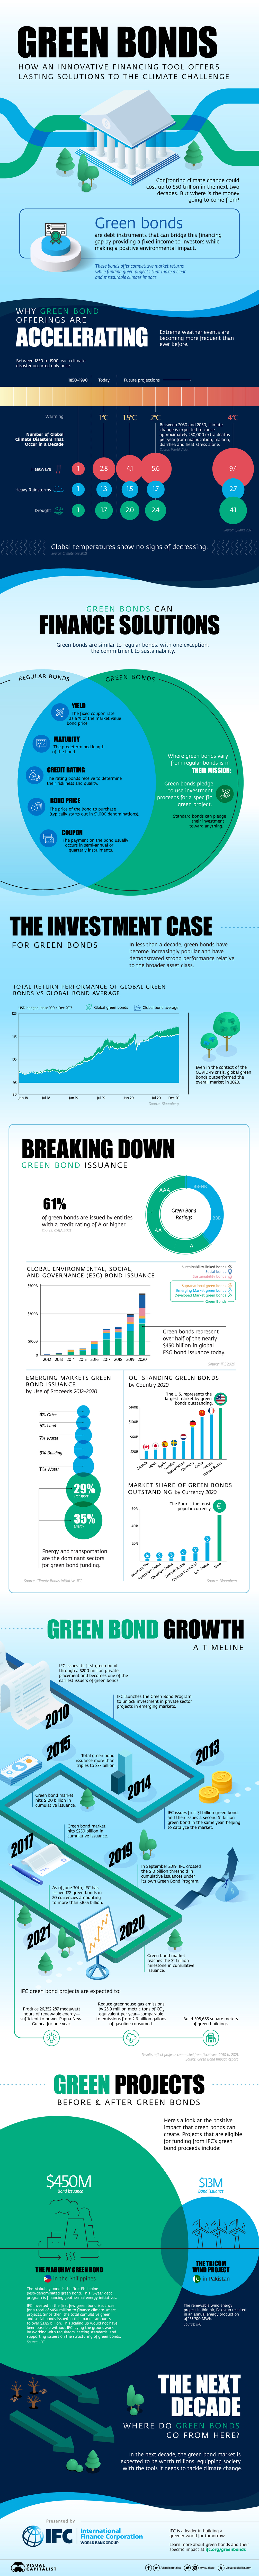 green bonds infographic